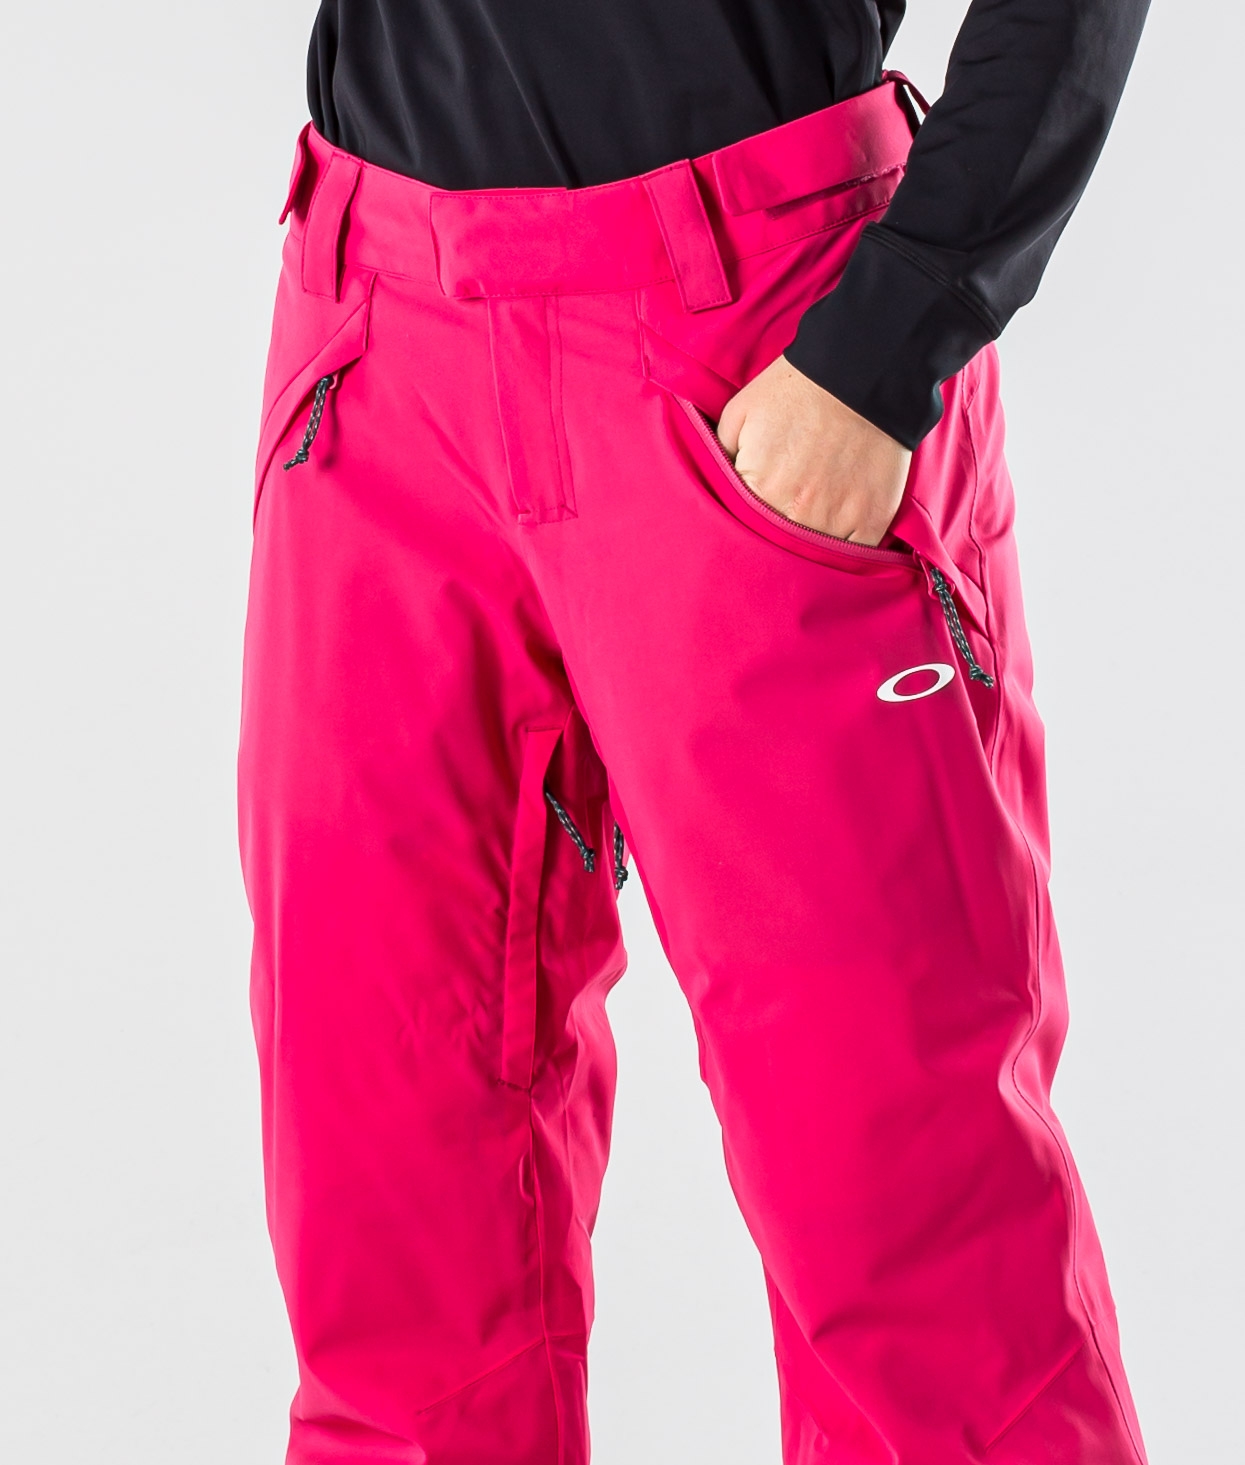 oakley womens ski pants